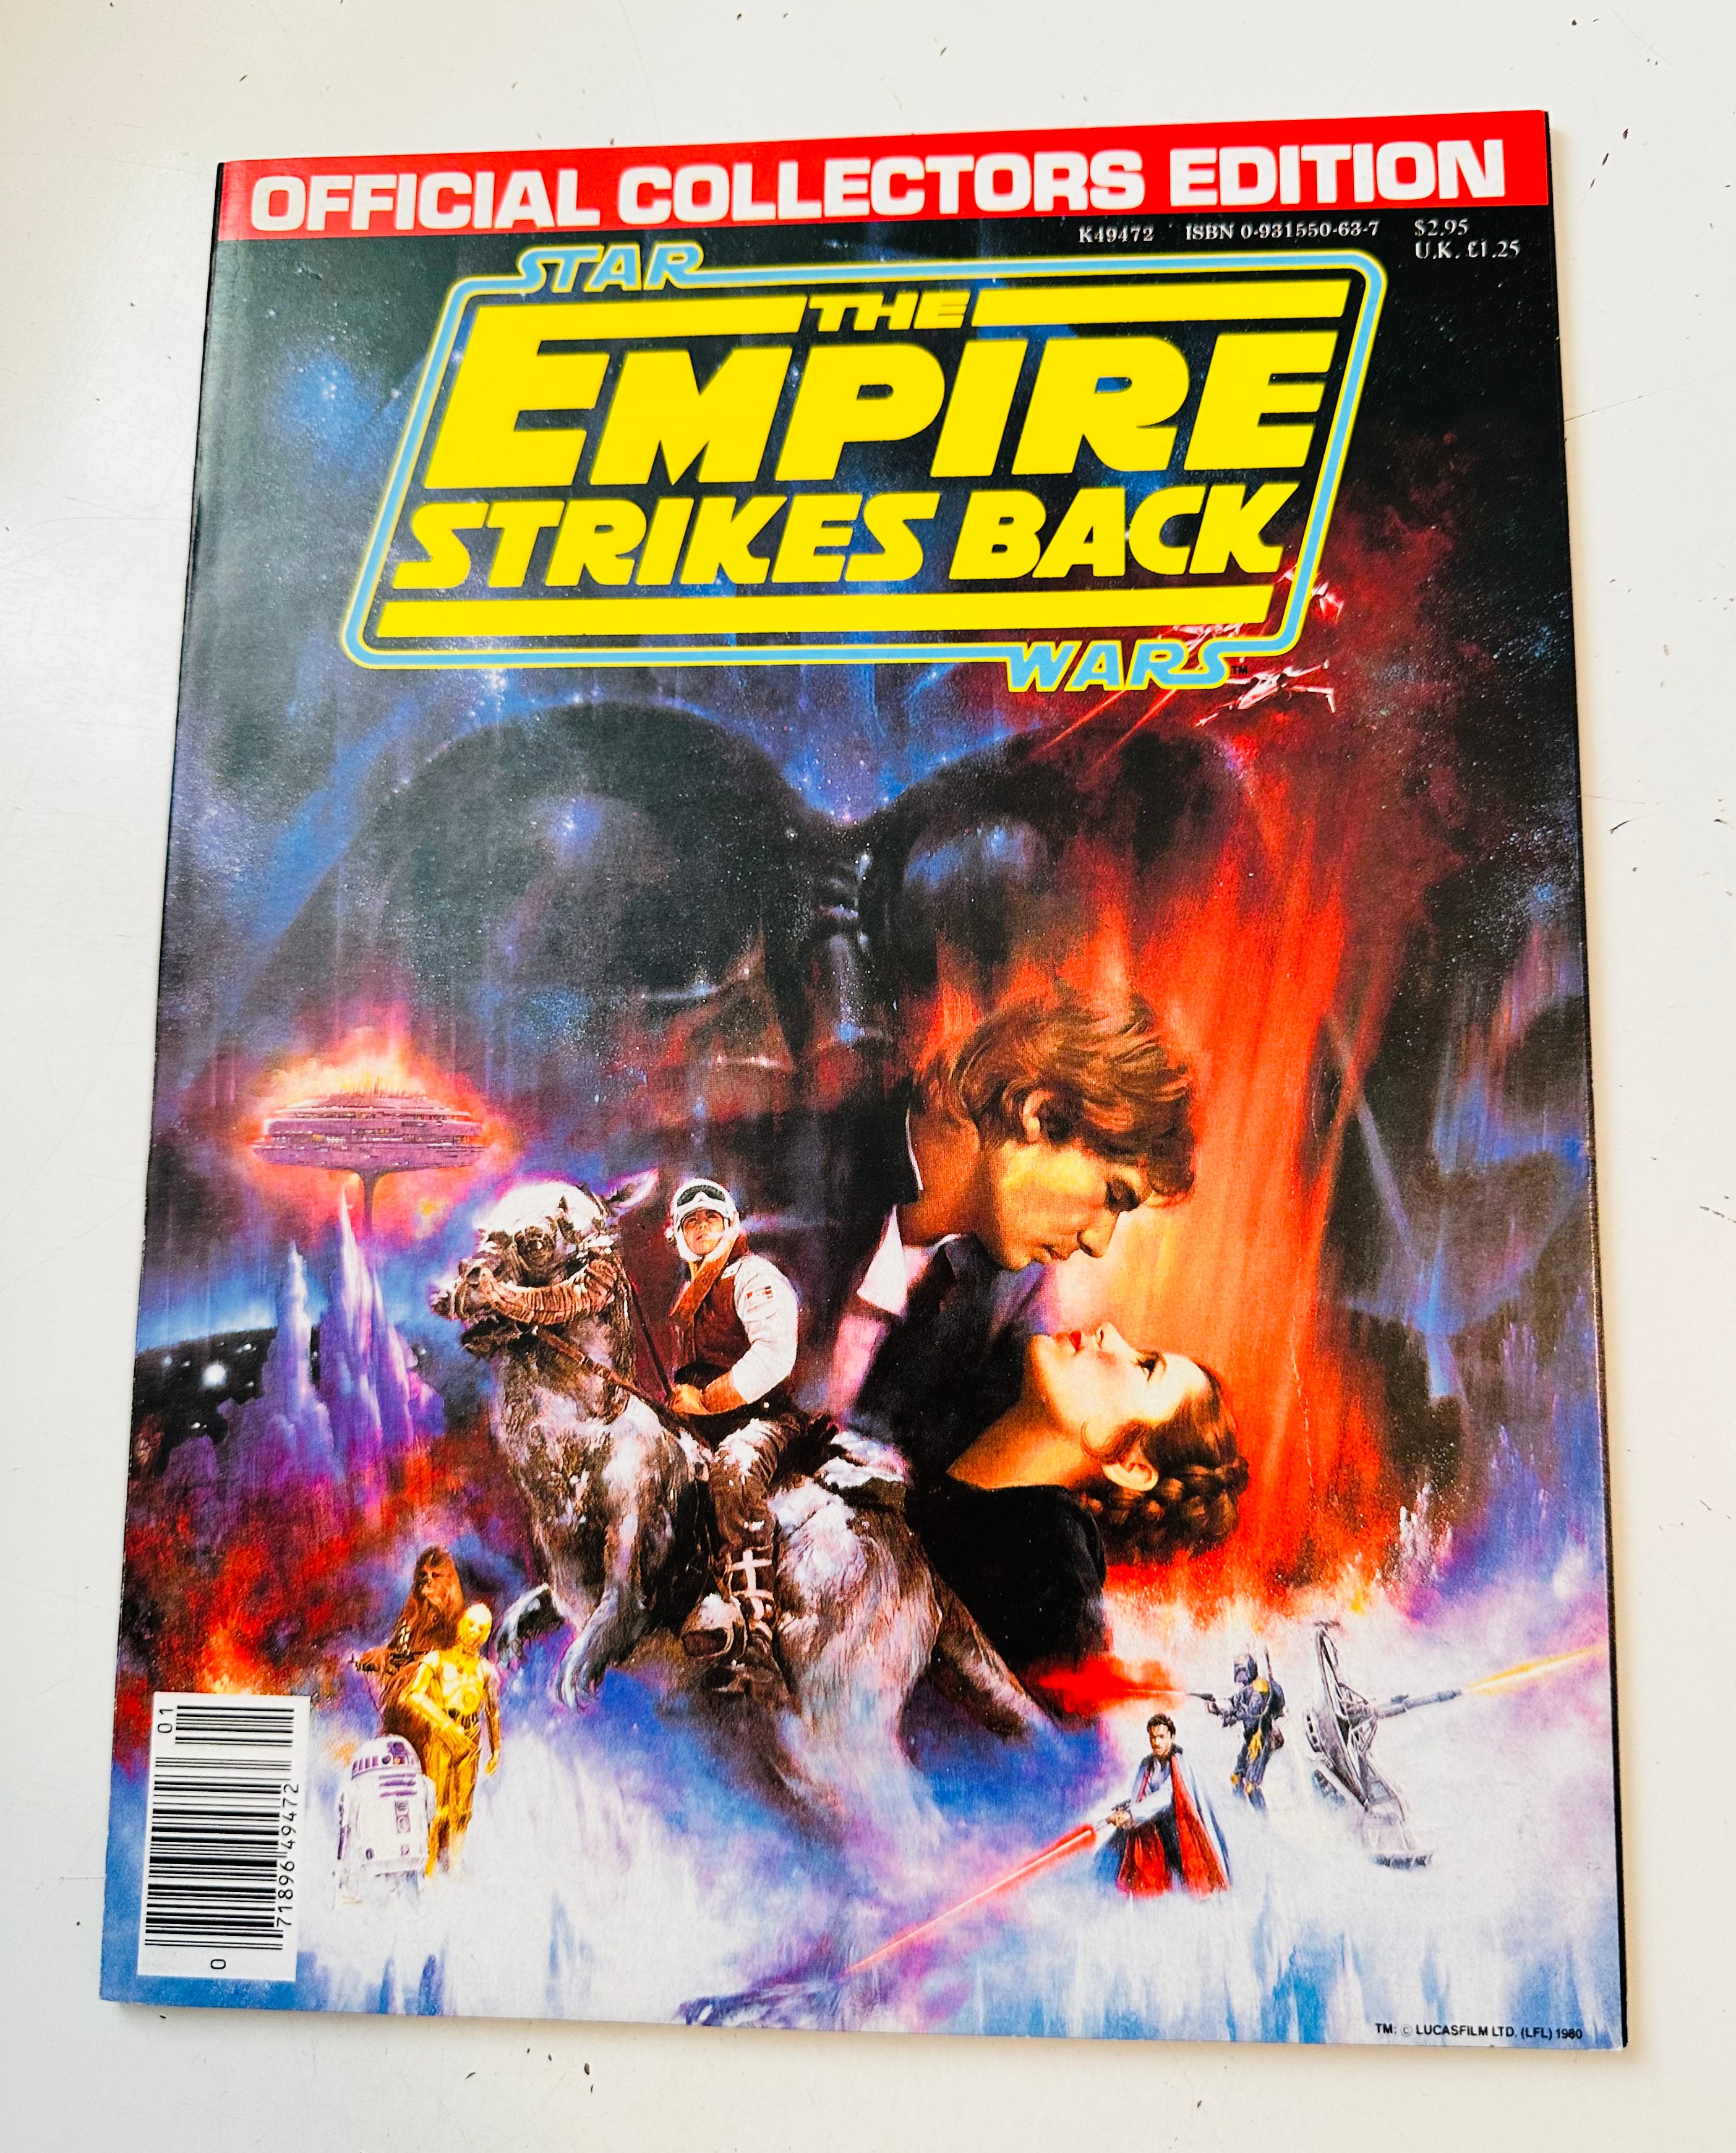 Empire Strikes back Collectors edition book 1980